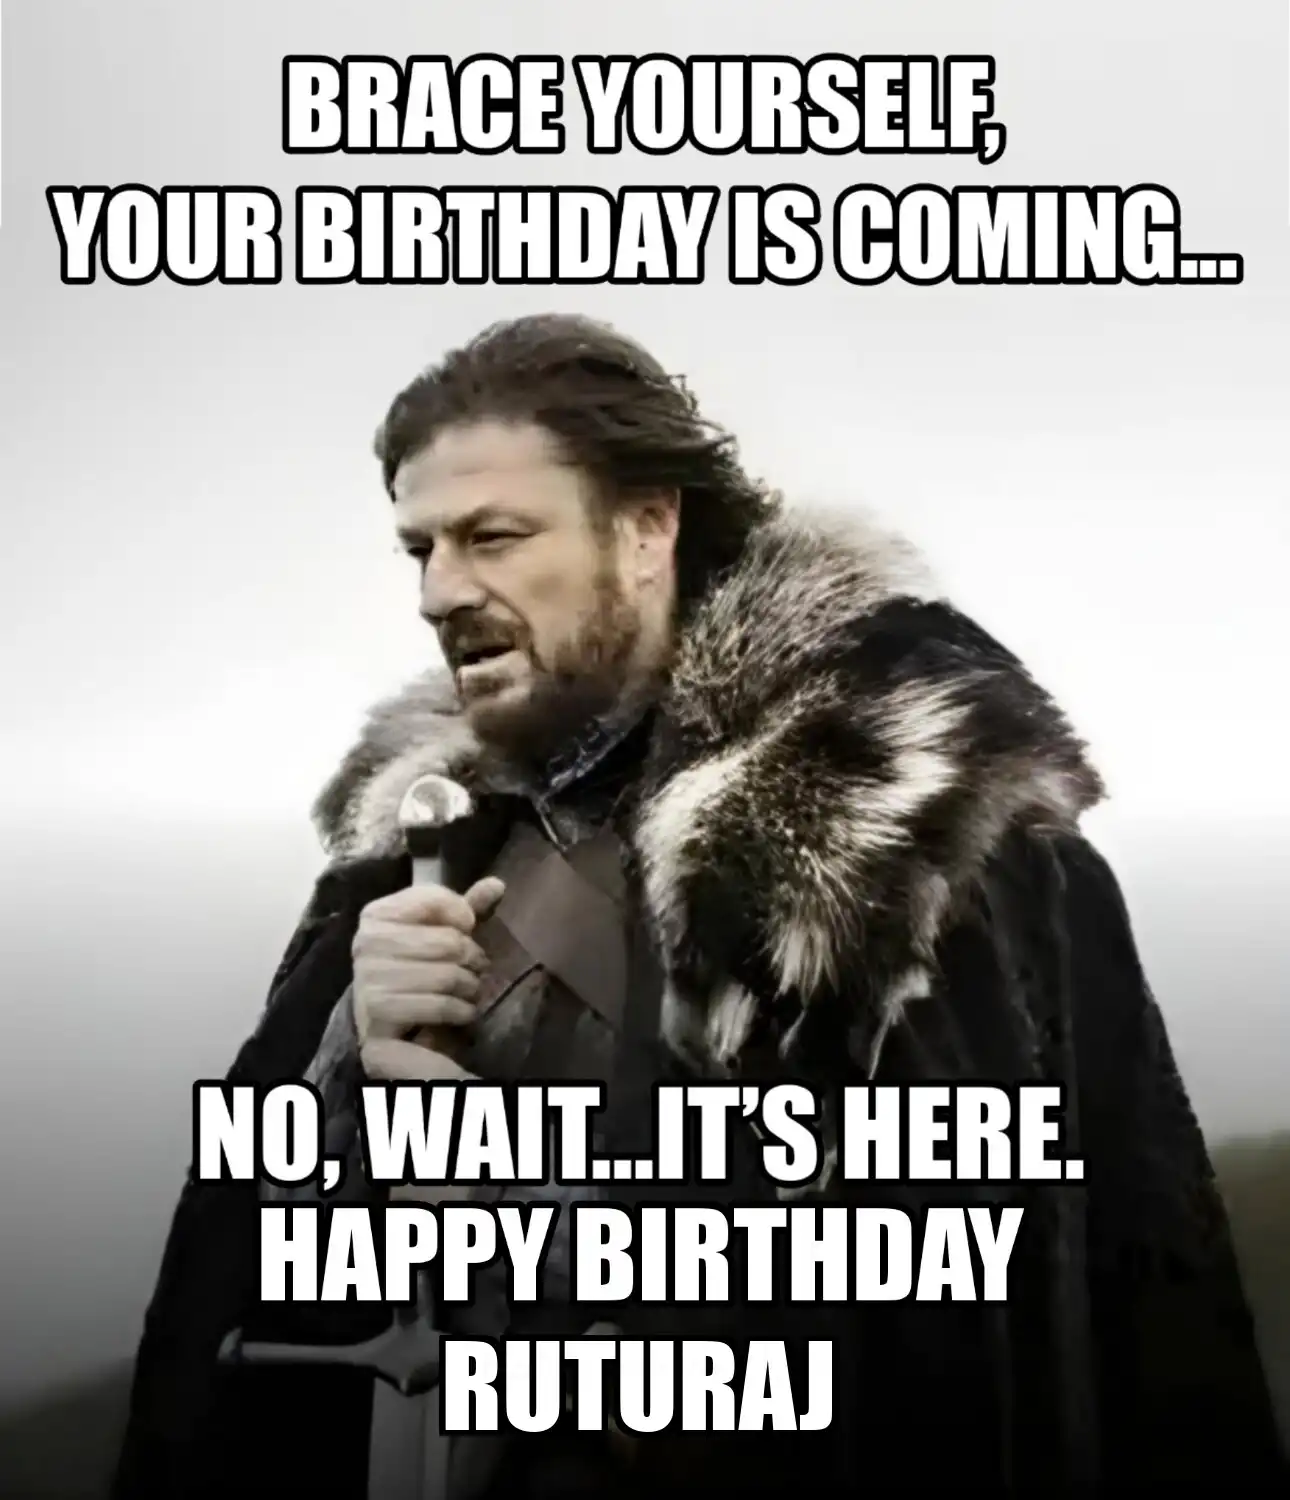 Happy Birthday Ruturaj Brace Yourself Your Birthday Is Coming Meme